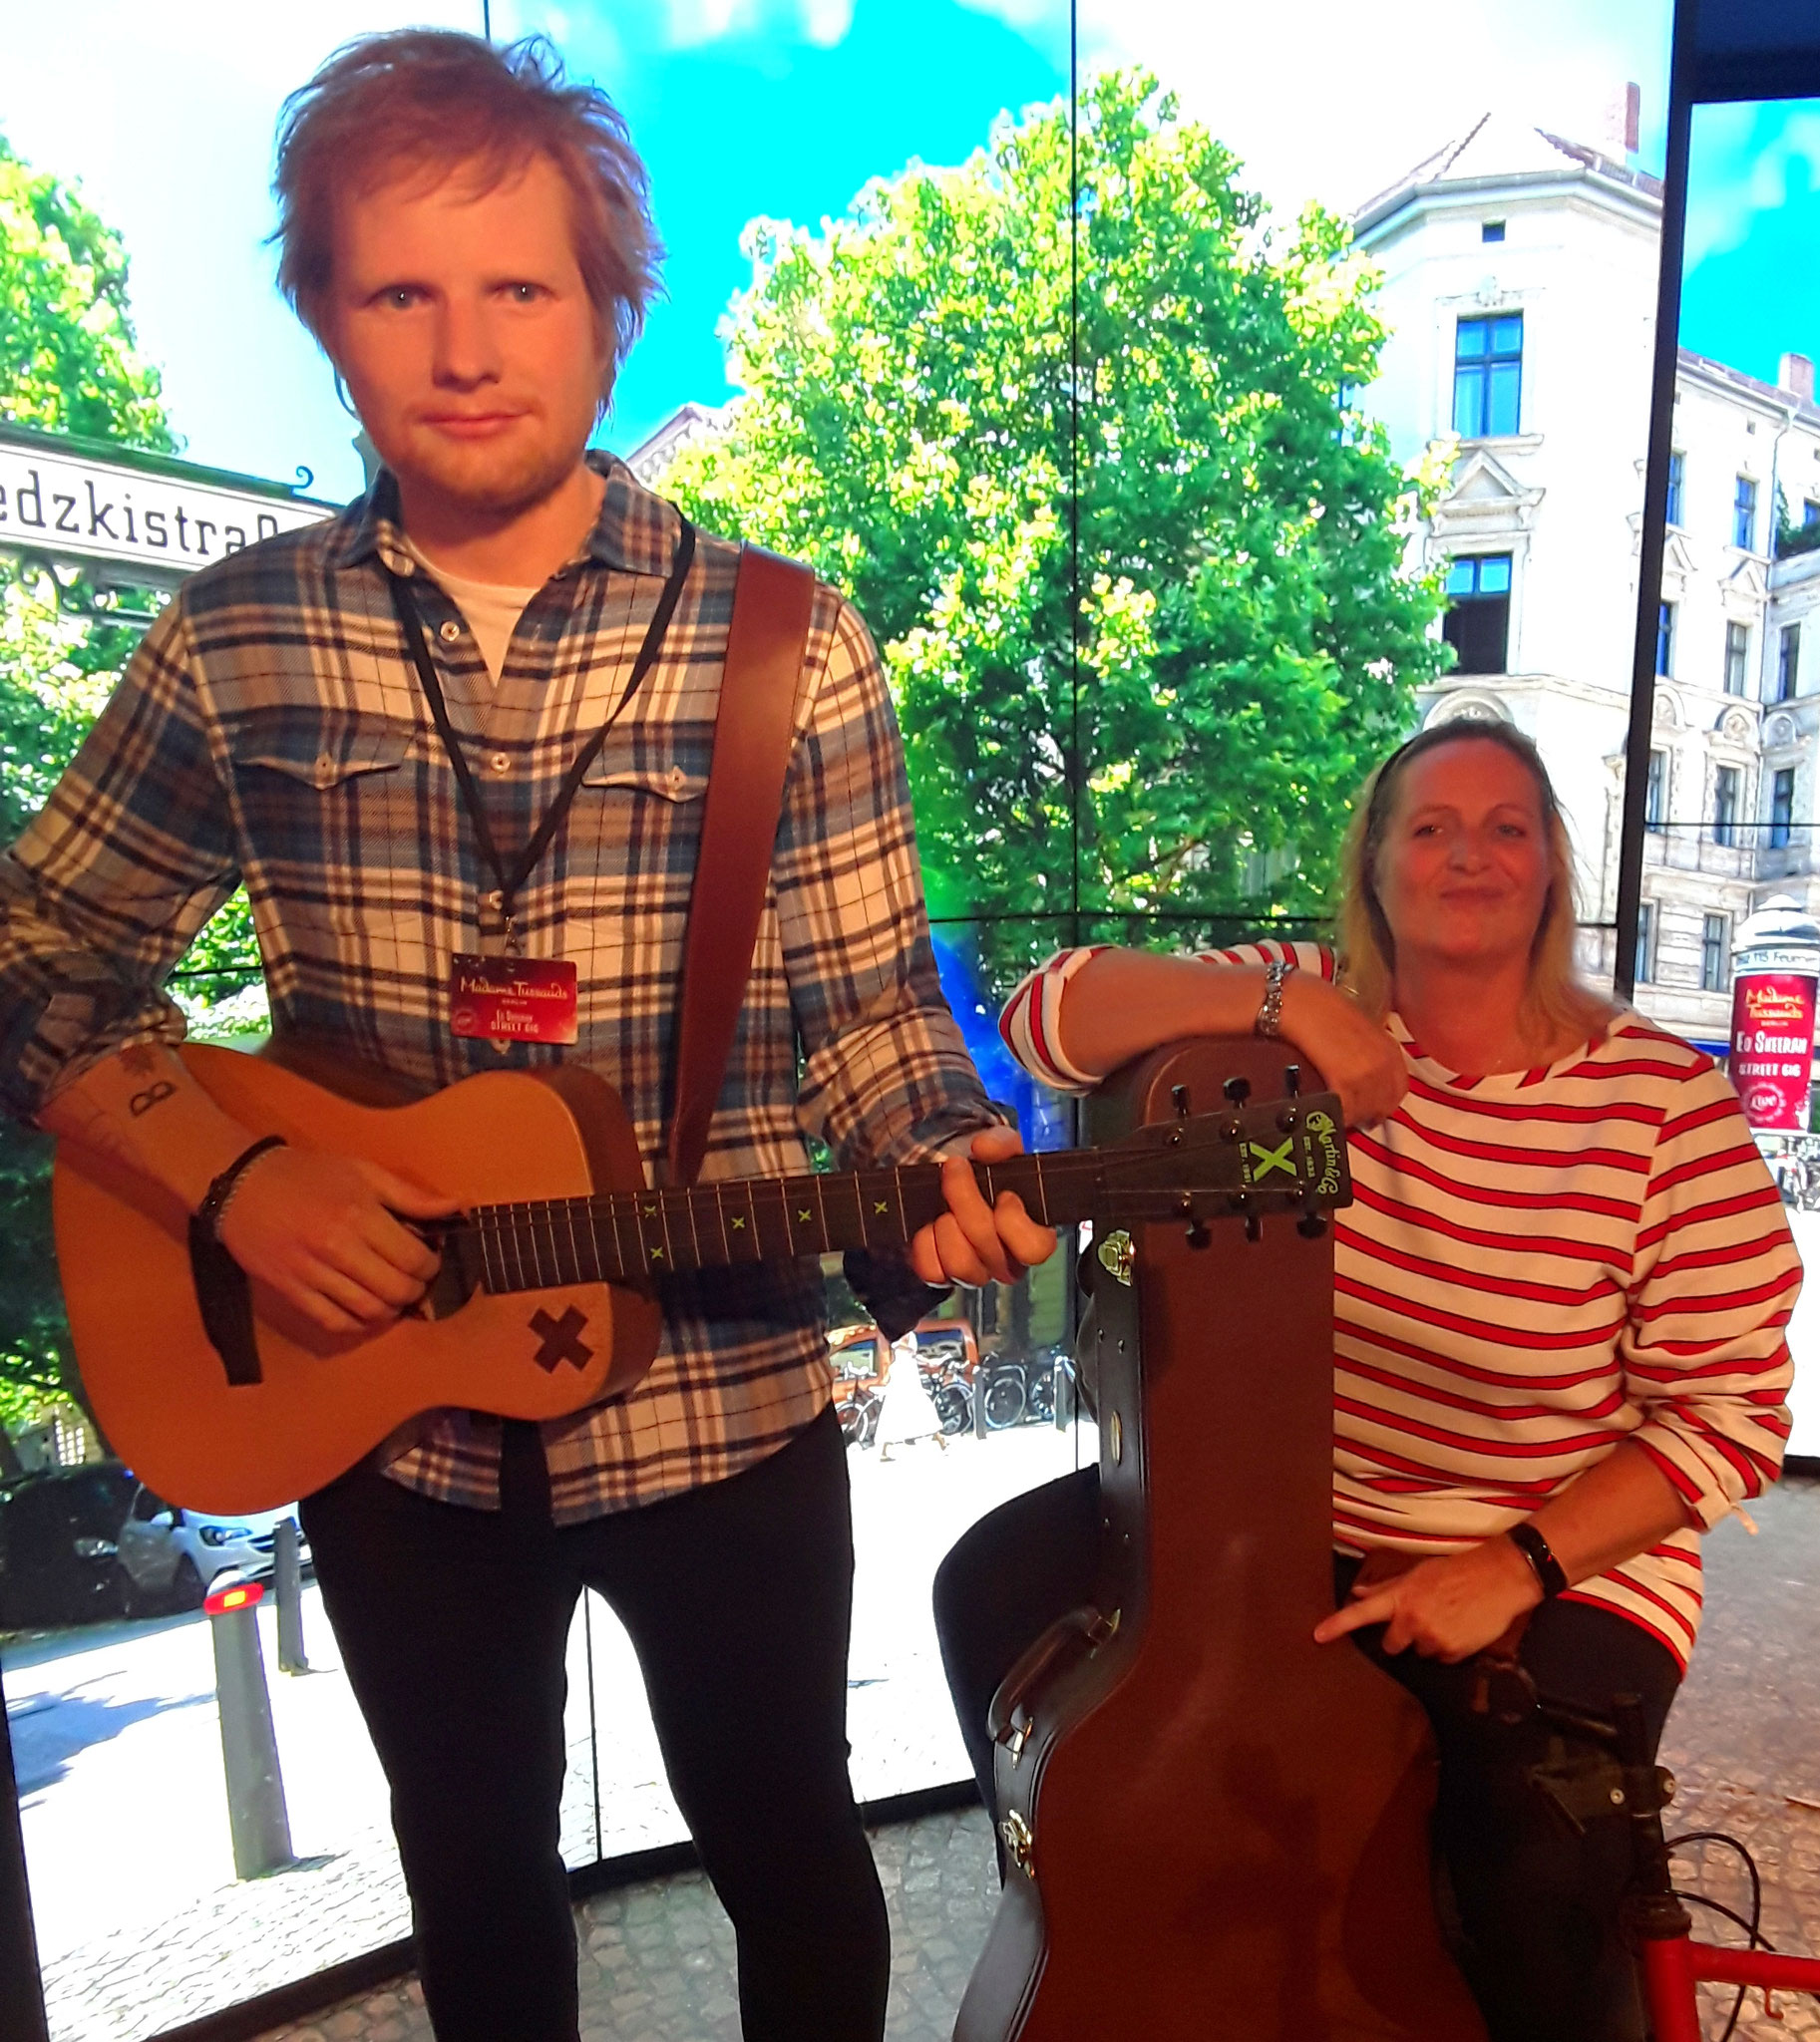 Musik machen mit Ed Sheeran, yeah!